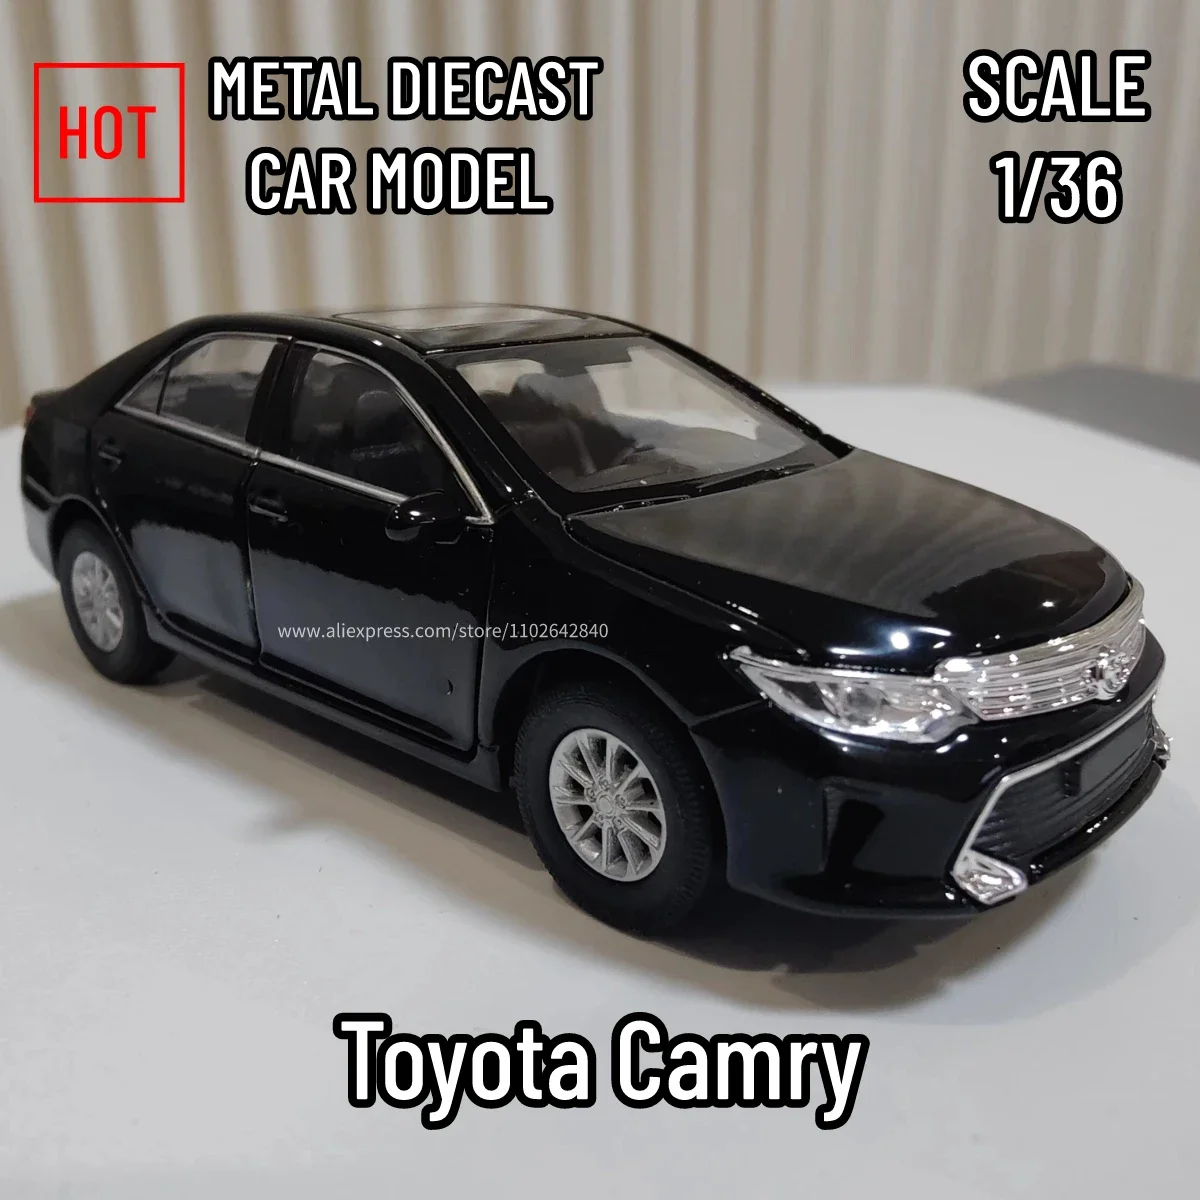 Toyota Camry Replica Diecast Car Model, Vehicle Interior Decor, Ornament, Xmas Gift, Kid Toy, Boy, 1/36 Scale